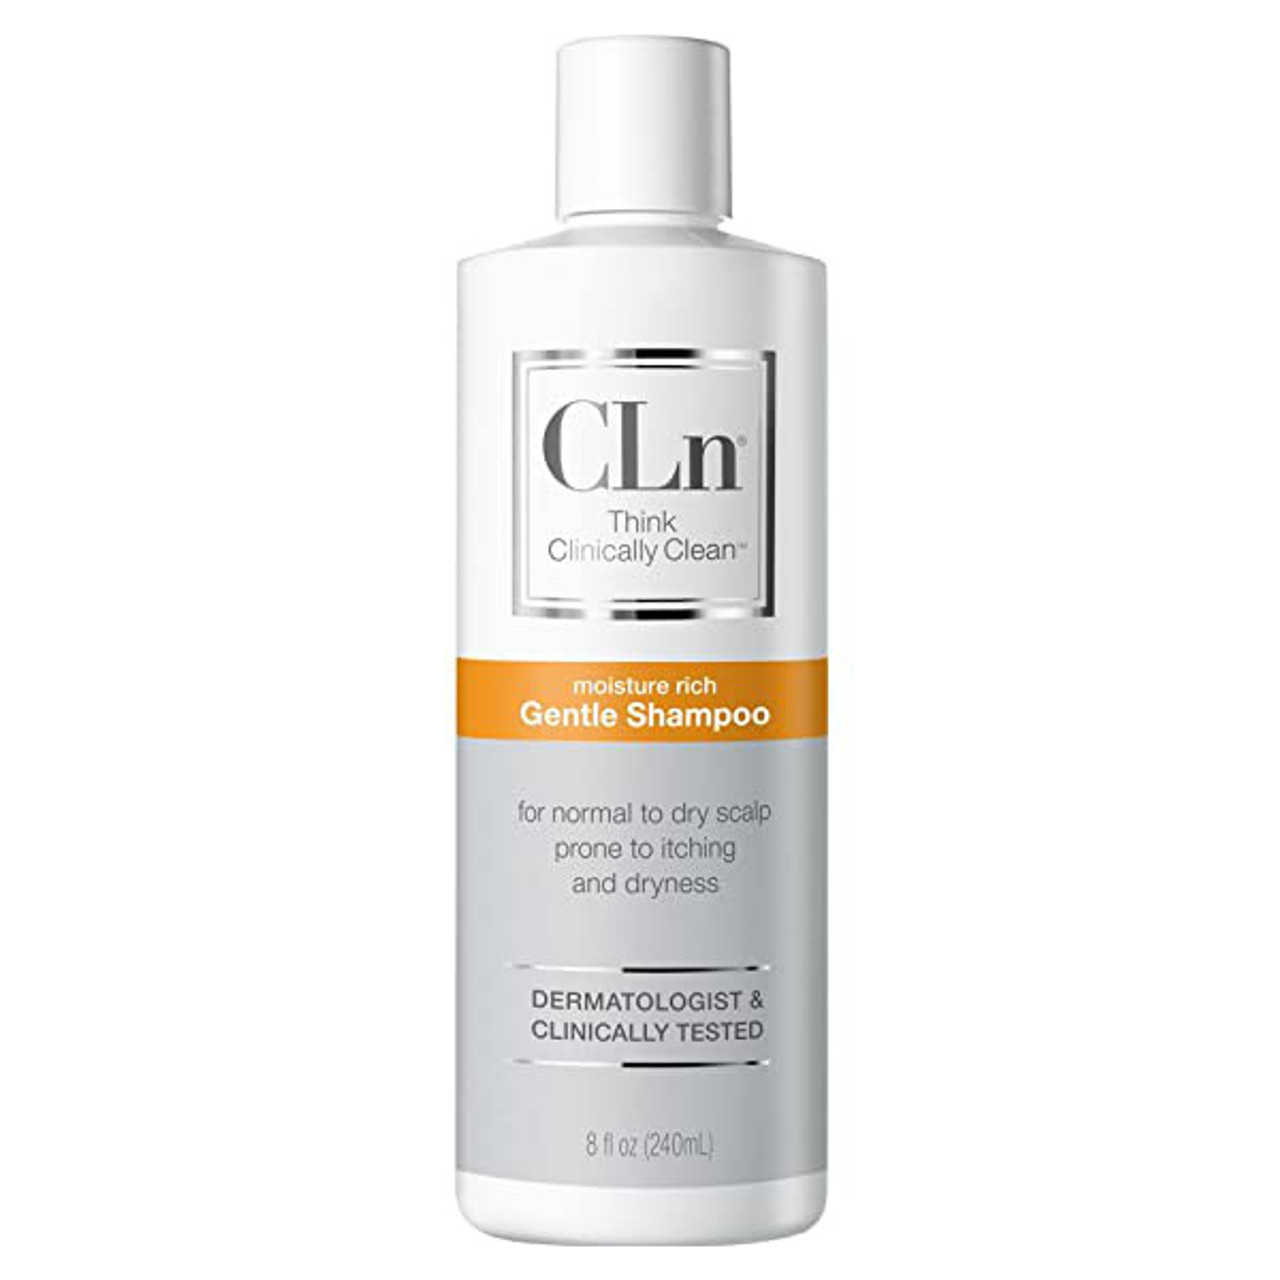 CLn Skin Care Gentle Shampoo - 12 oz